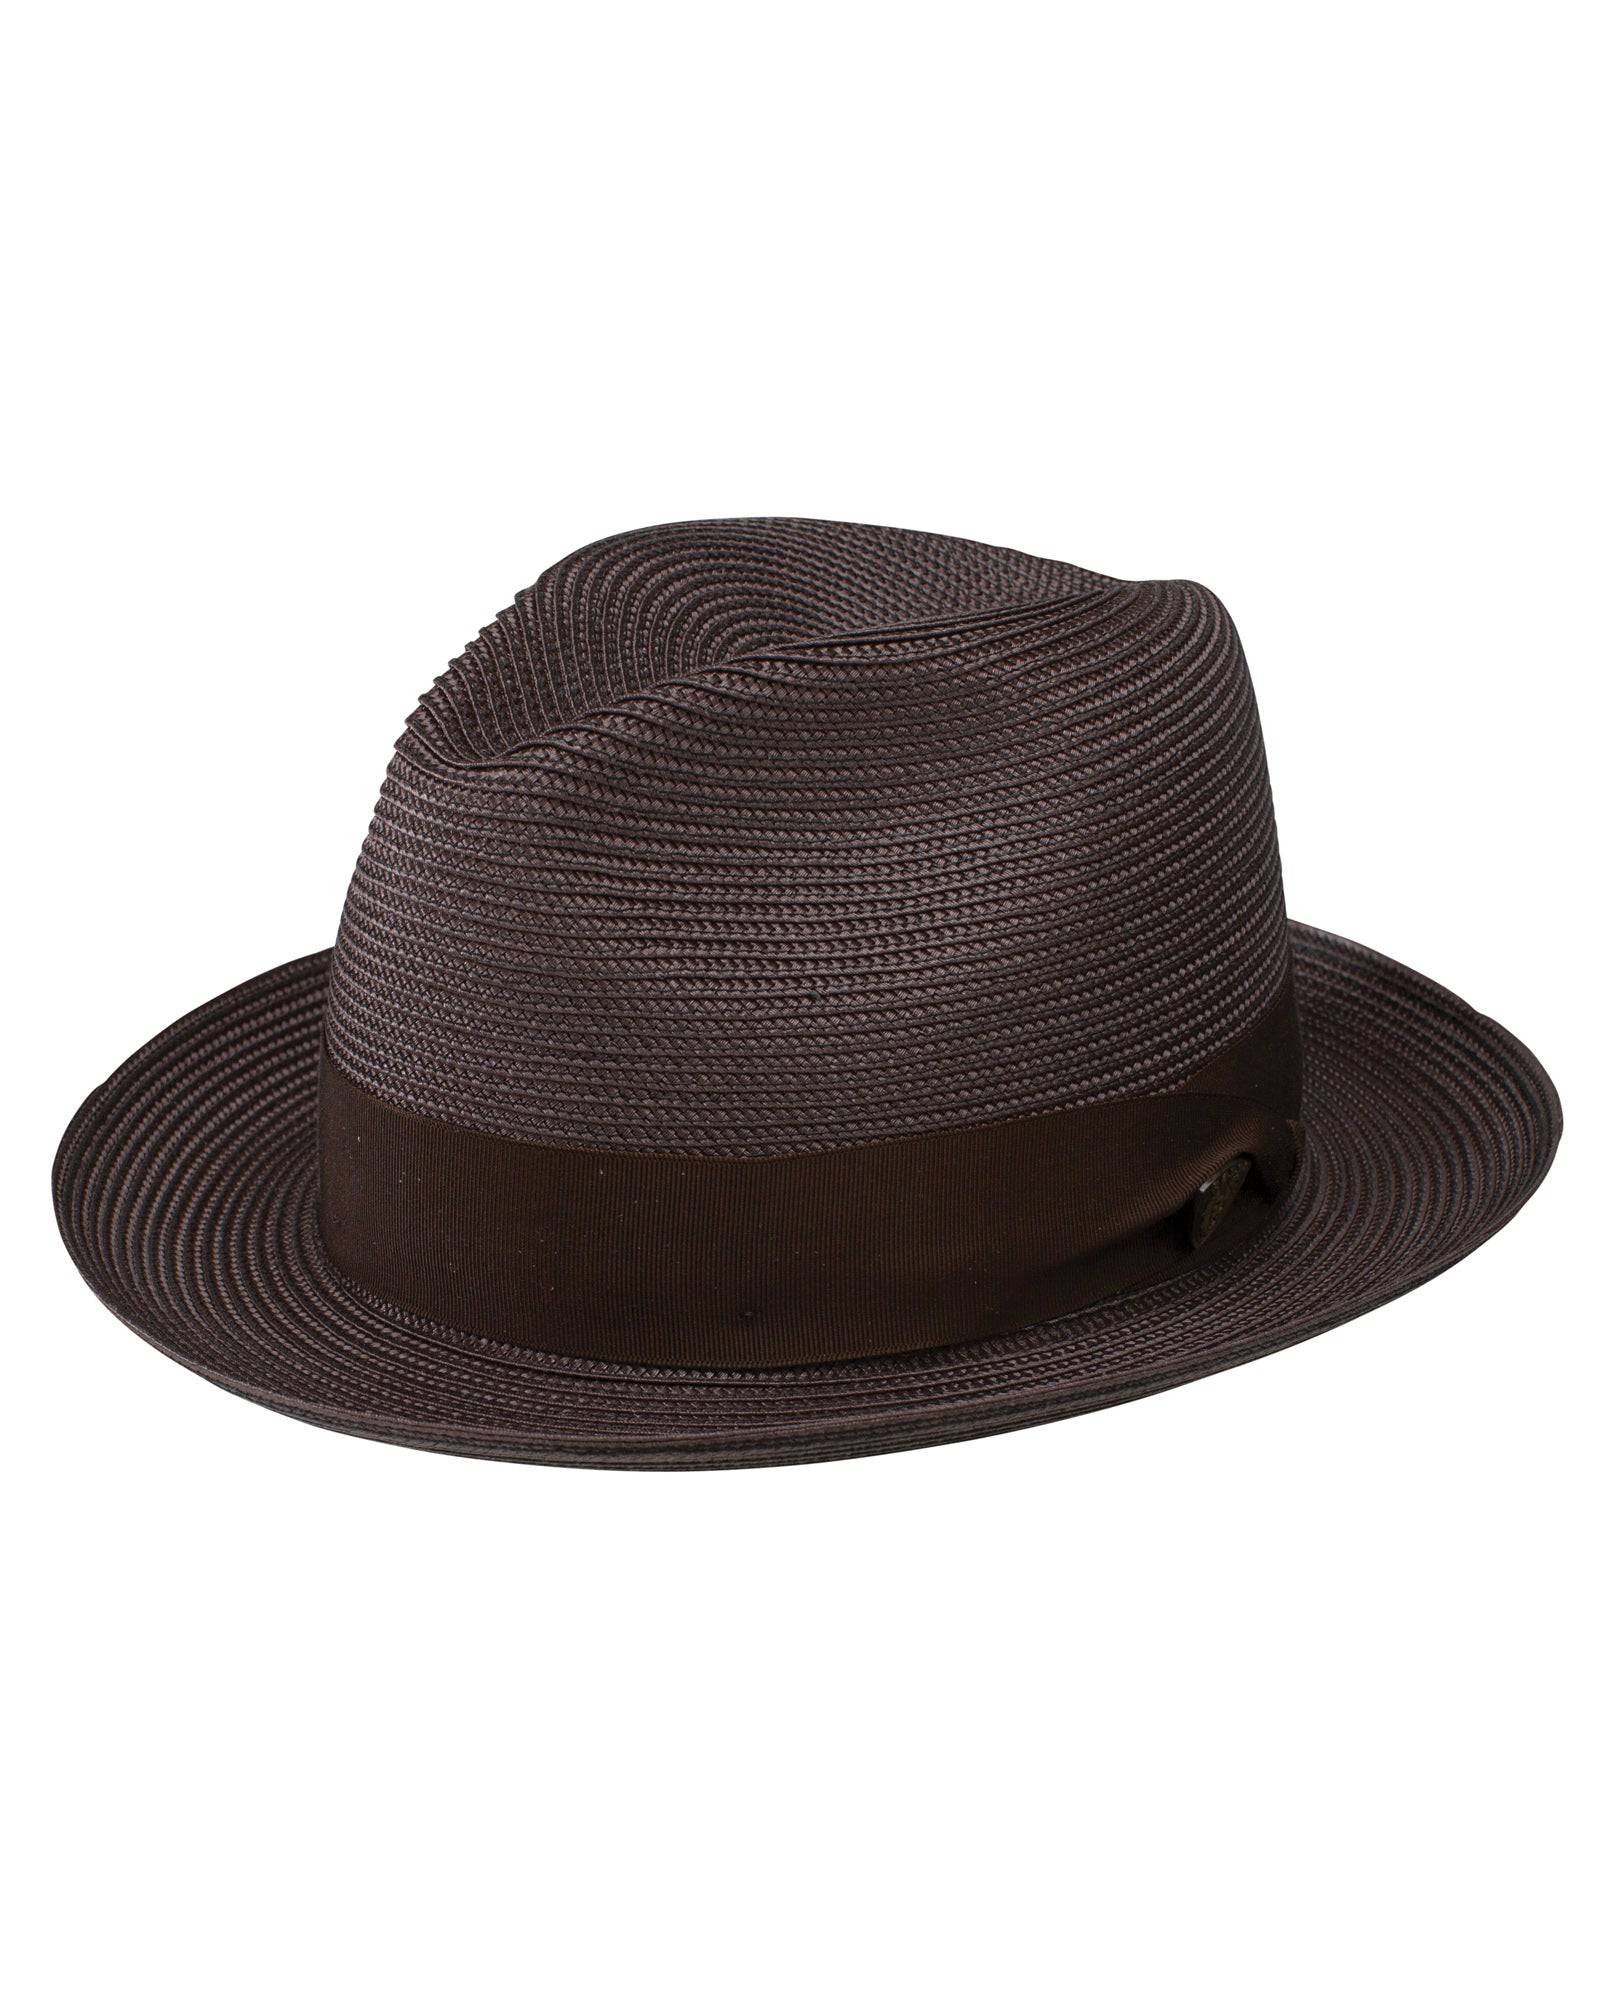 Dobbs Rosebud Straw Fedora Hat in Brown - Rainwater's Men's Clothing and Tuxedo Rental